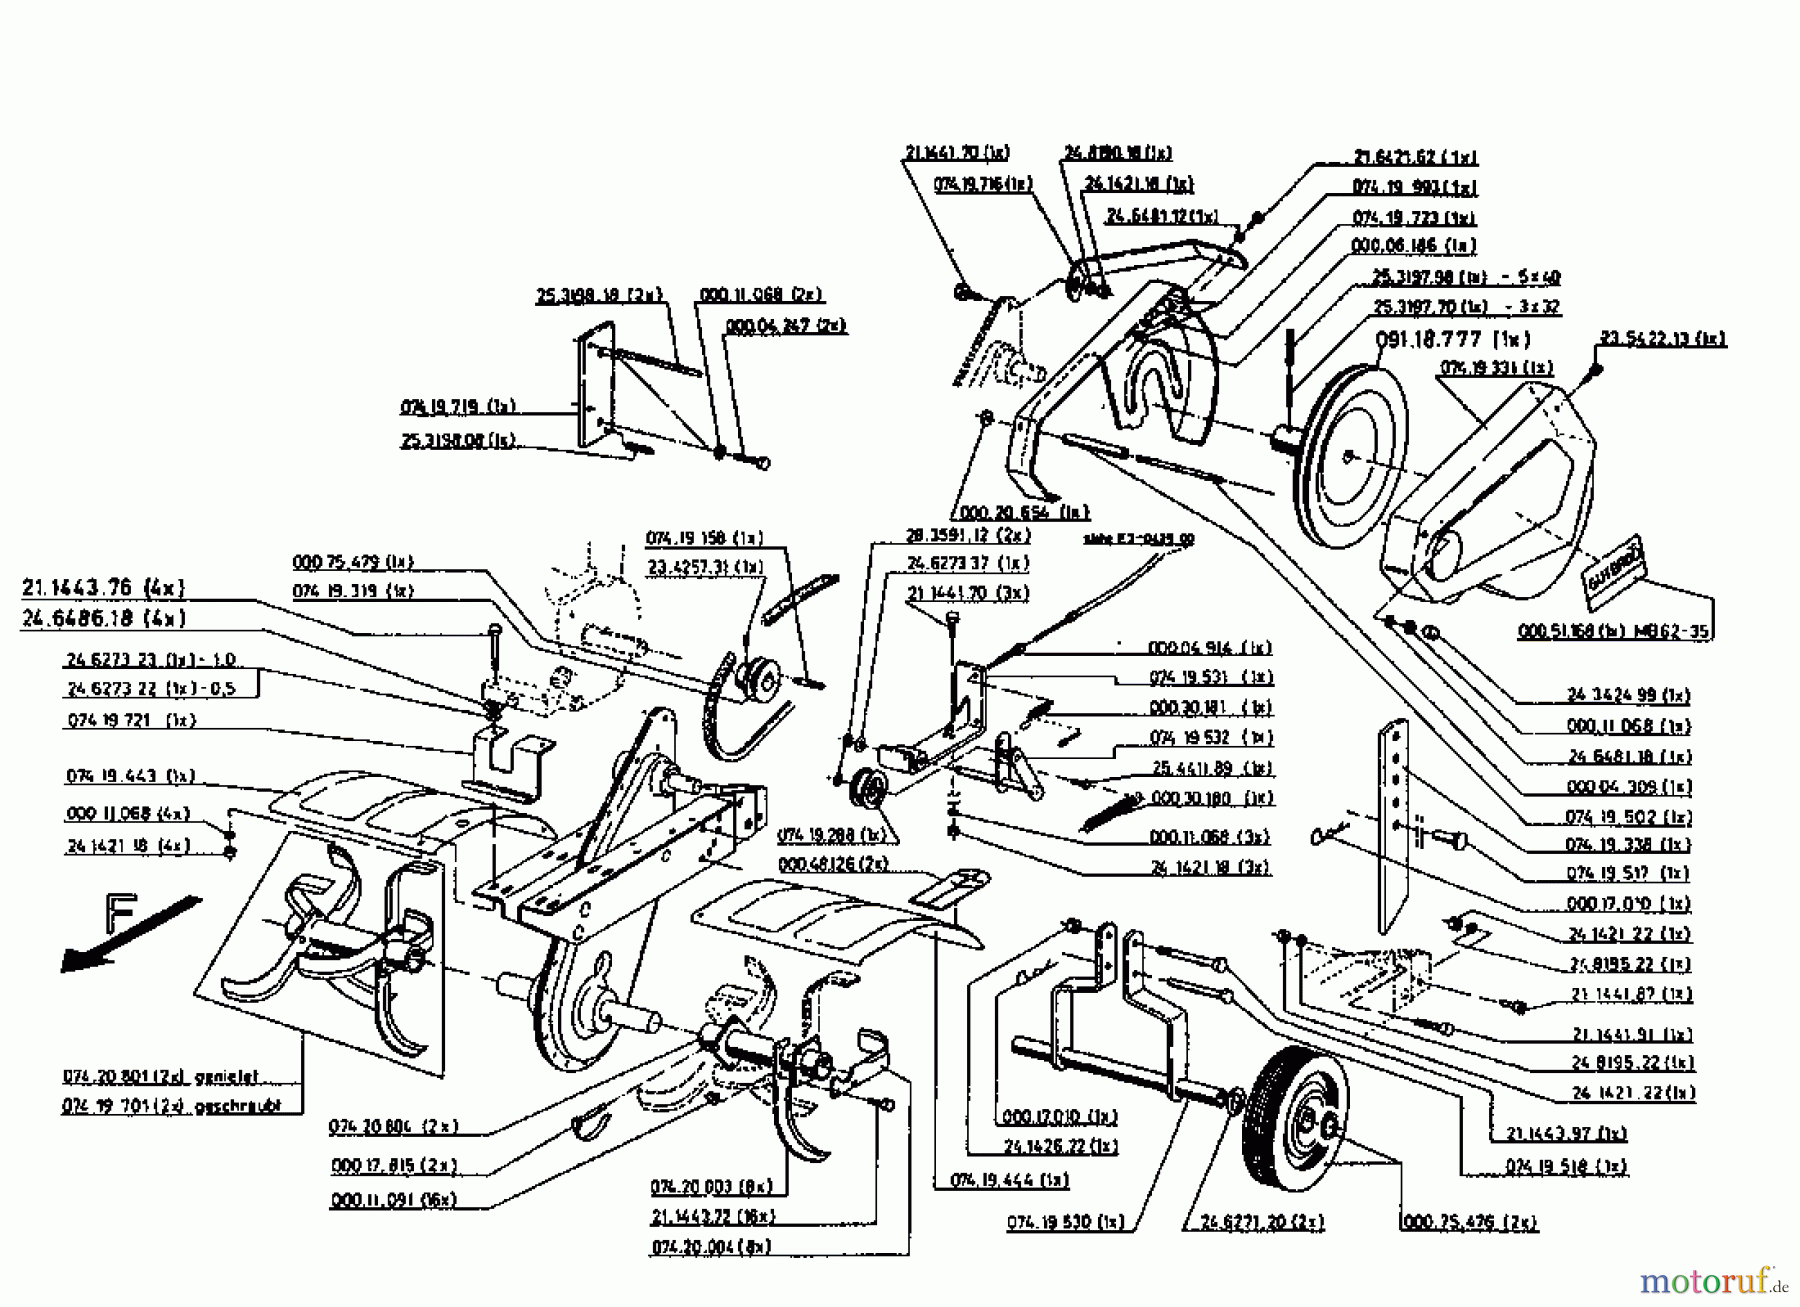  Gutbrod Motorhacken MB 62-35 07518.05  (1996) Grundgerät